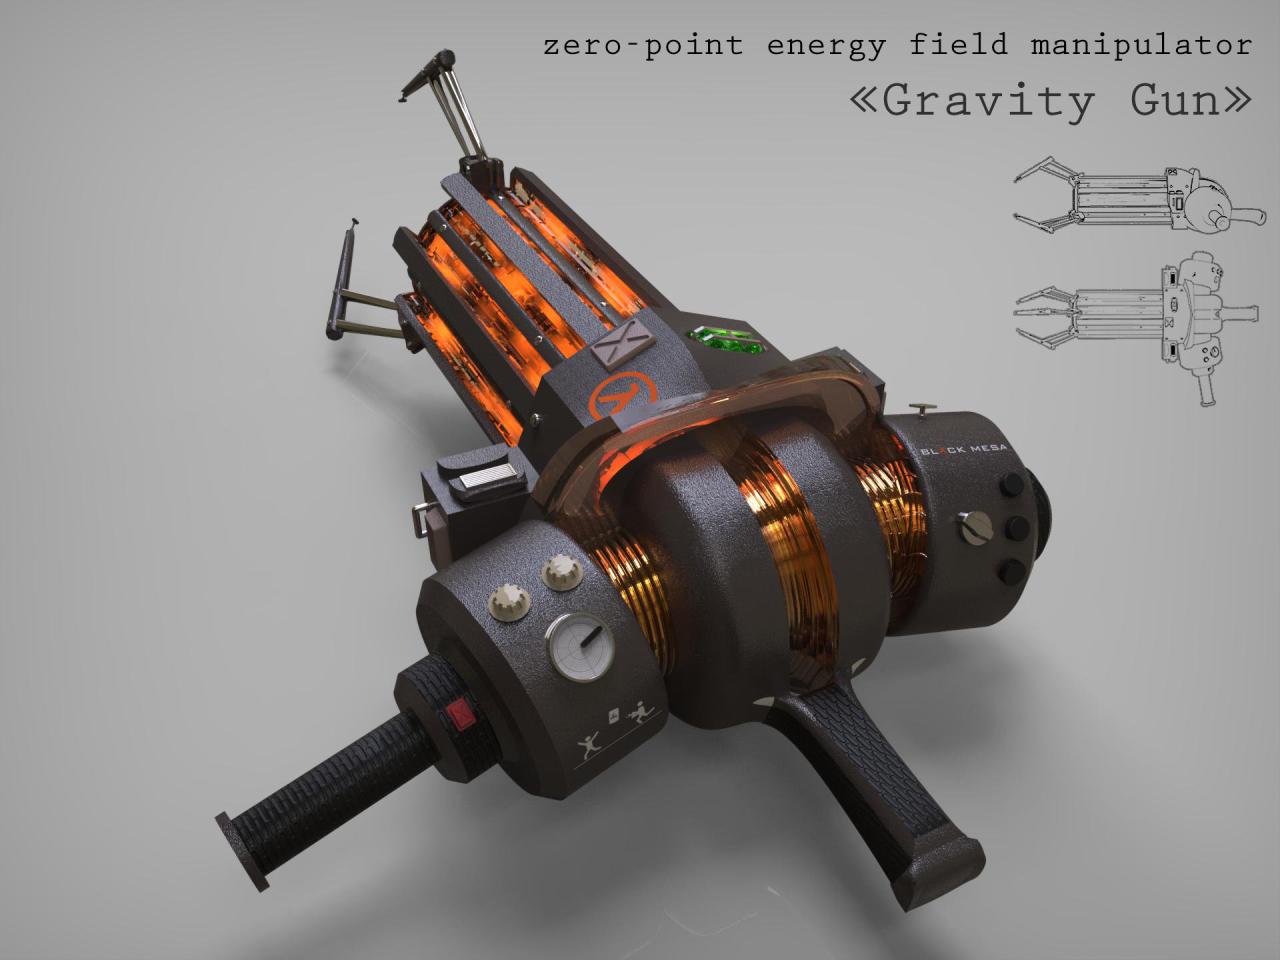 Gun gravity half life prop replica energy zero point manipulator field info toyark